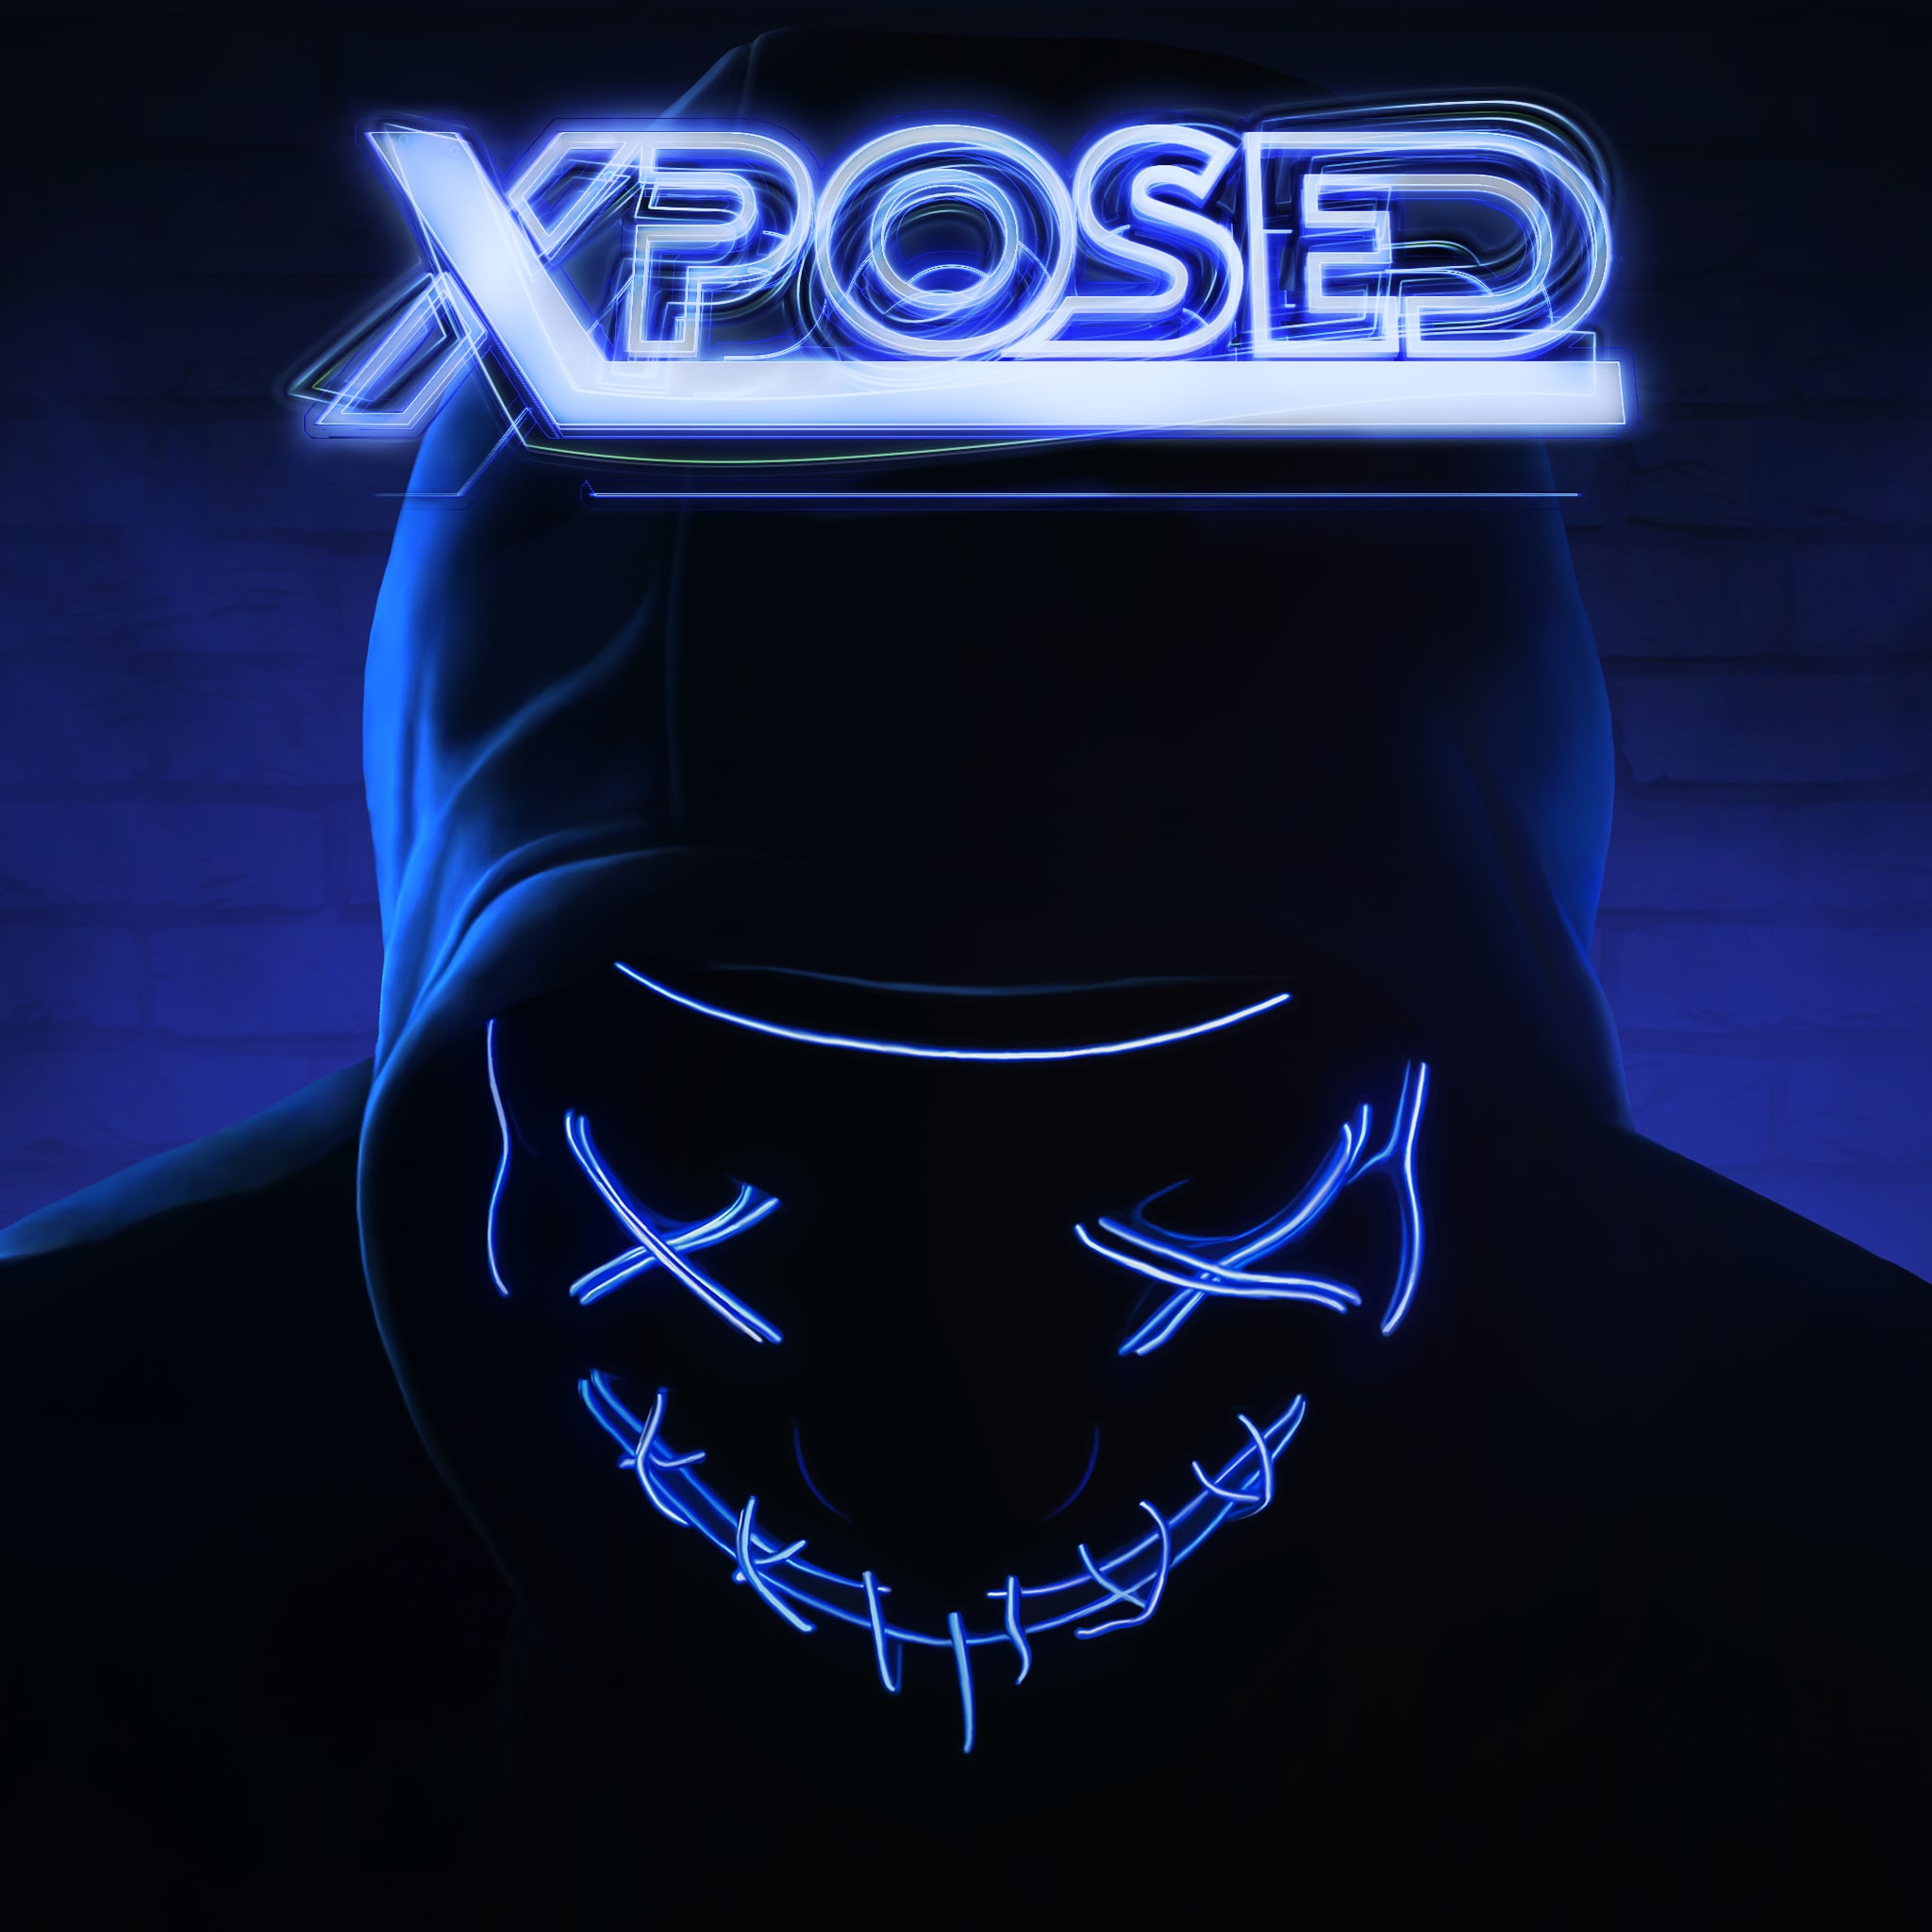 XPOSED - Neon Hacker Dynamic Theme